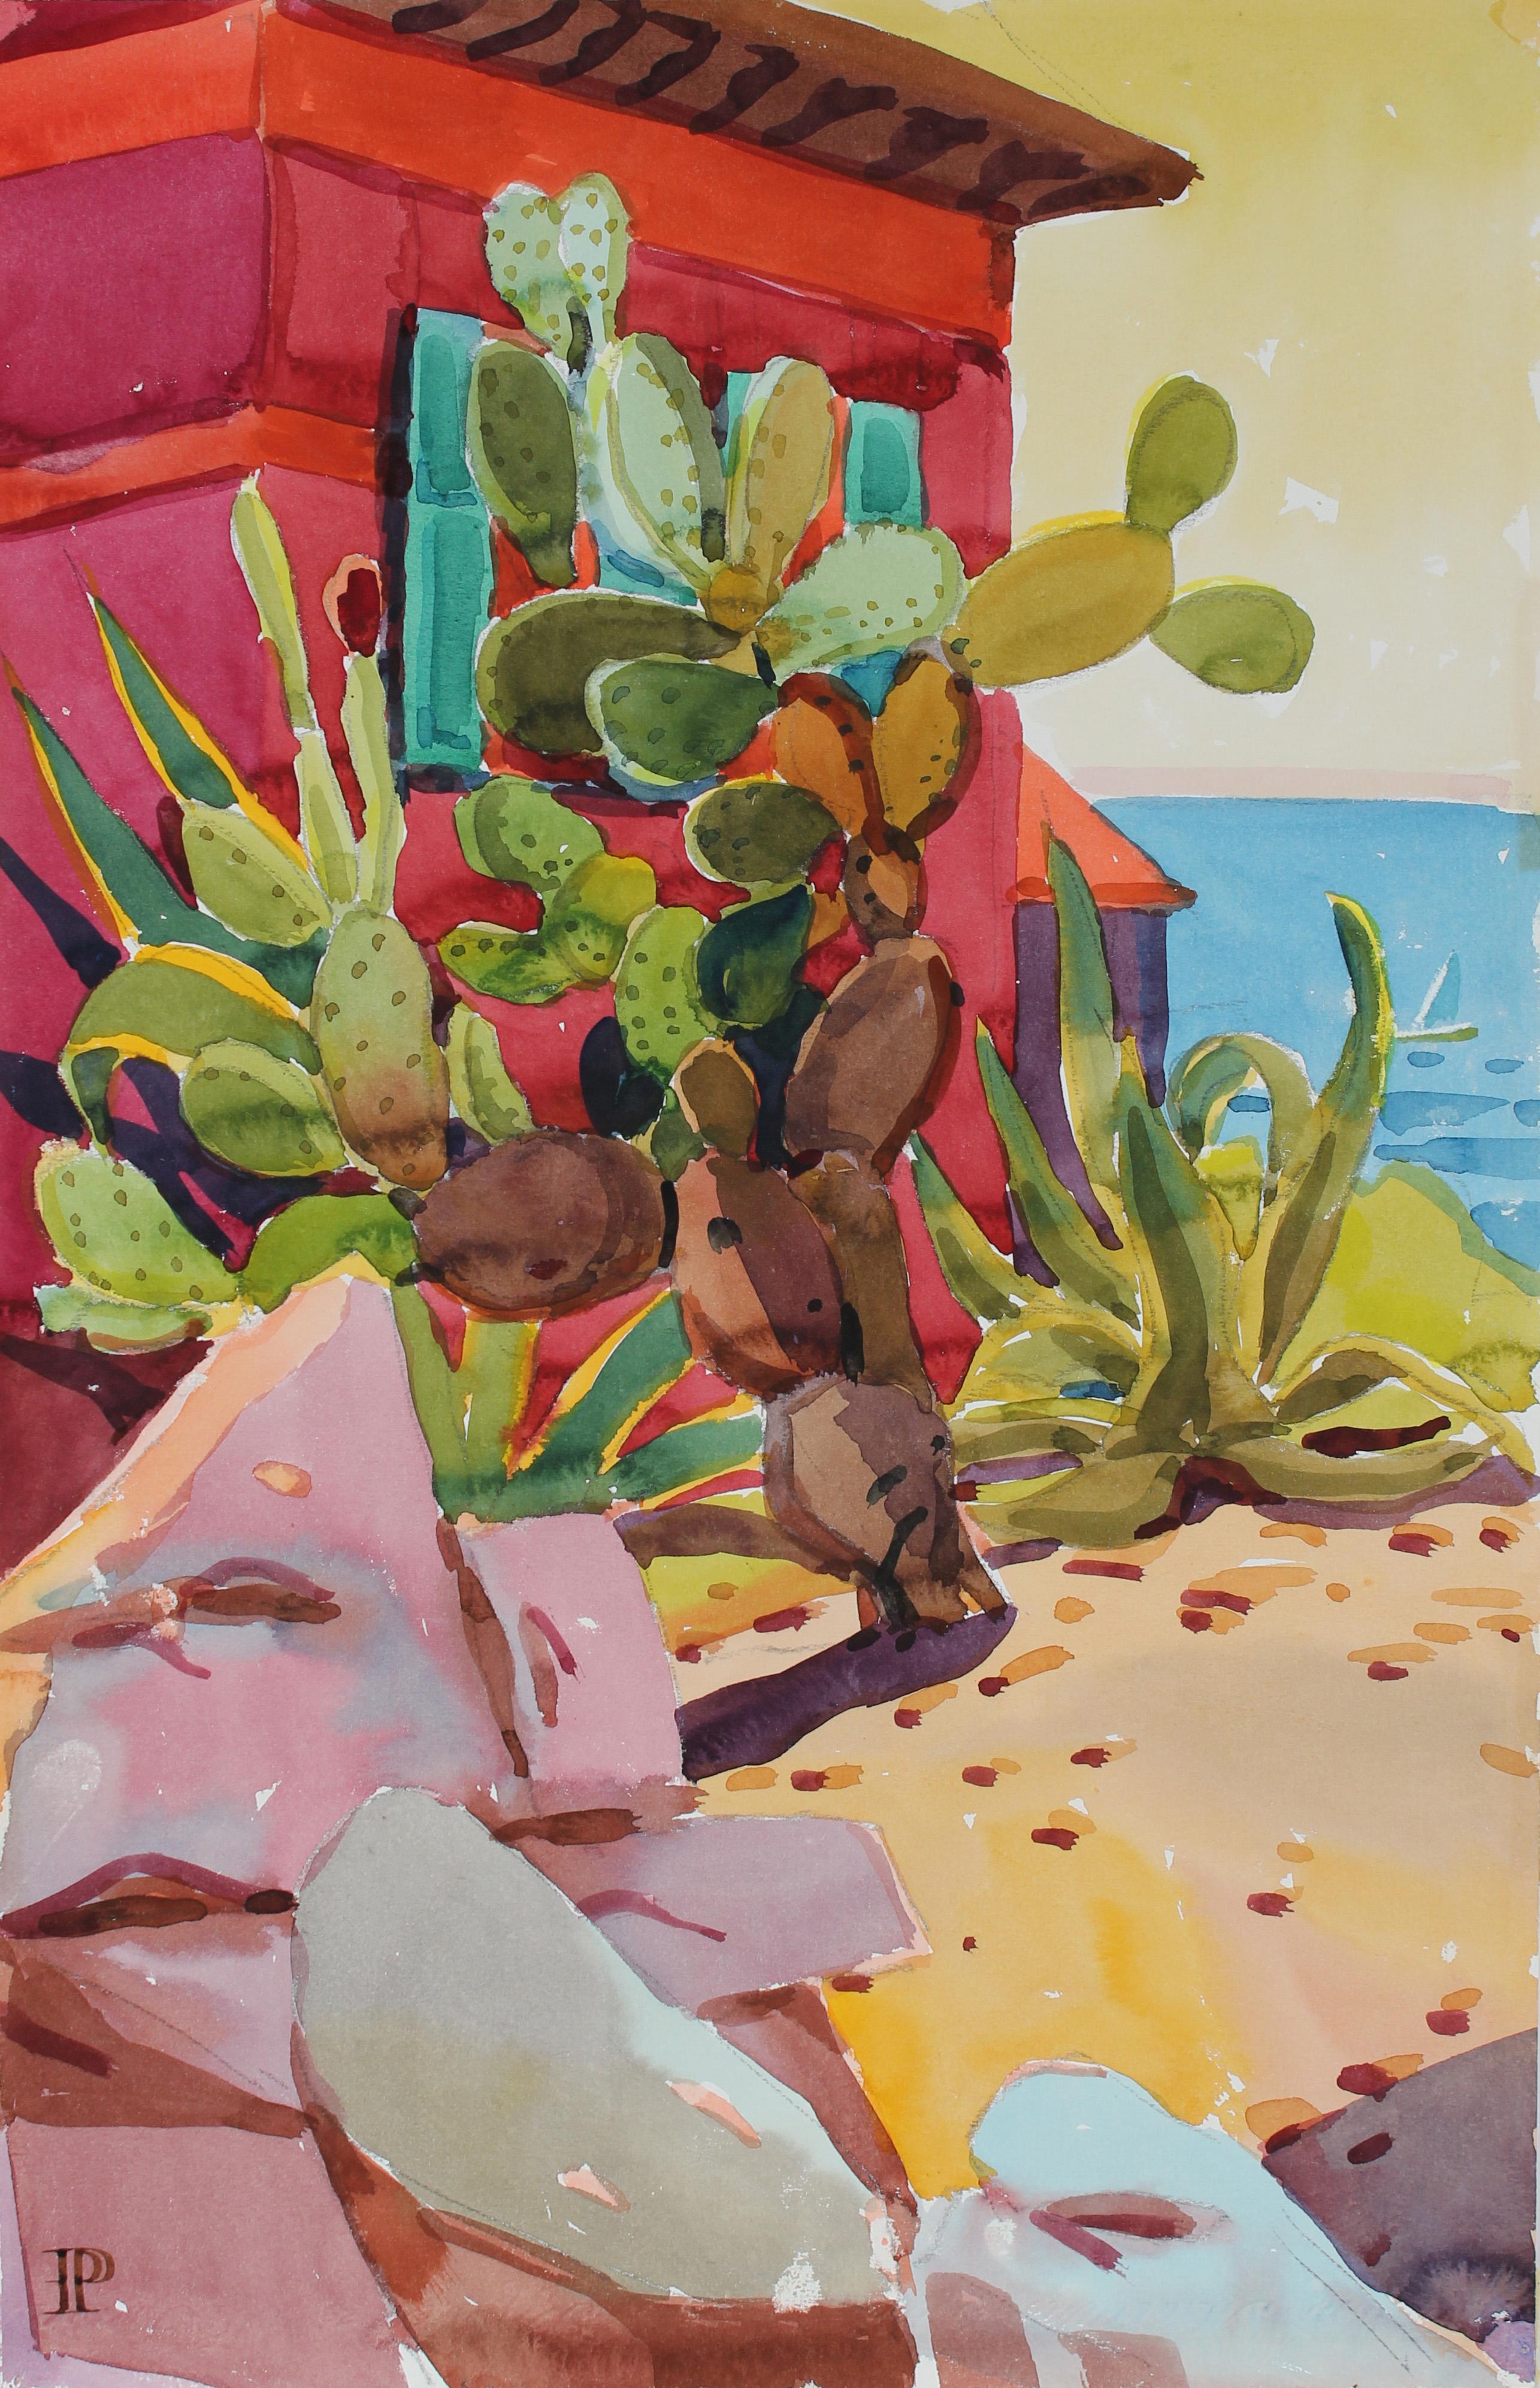 Frederick Pomeroy Landscape Art - "Rocks and Cactus" Watercolor Landscape Painting, 20th Century